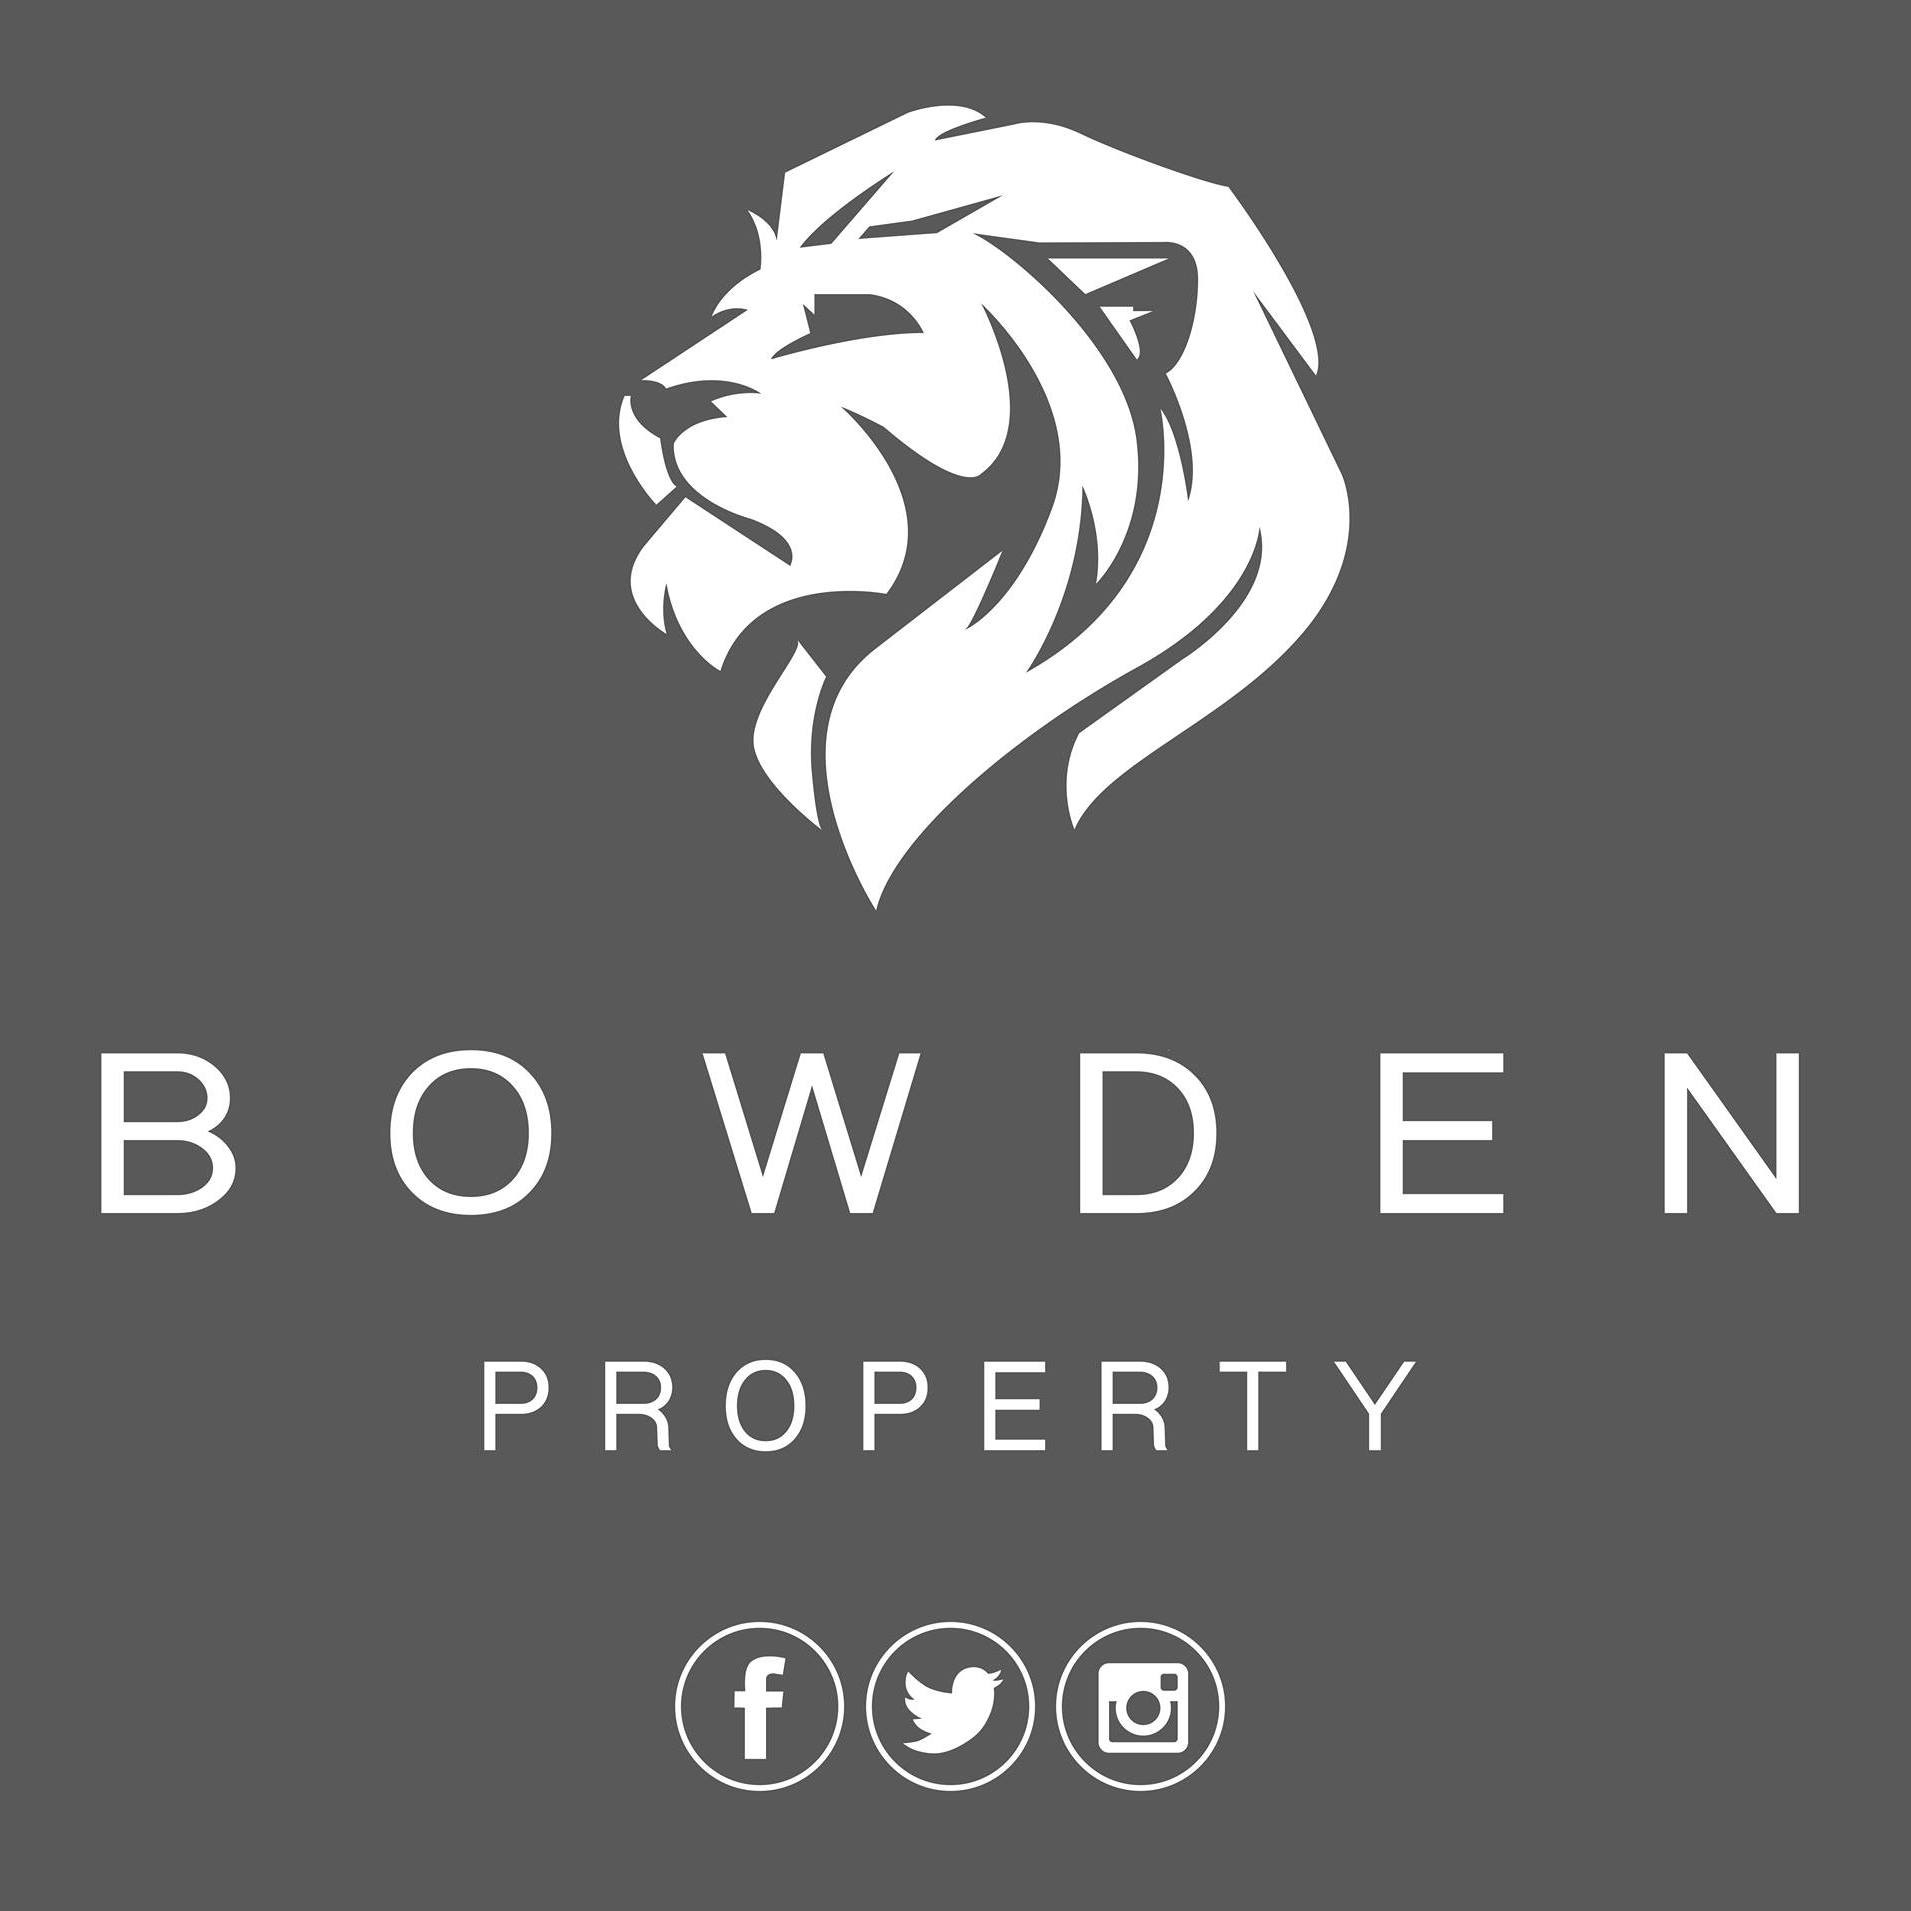 Bowden Property